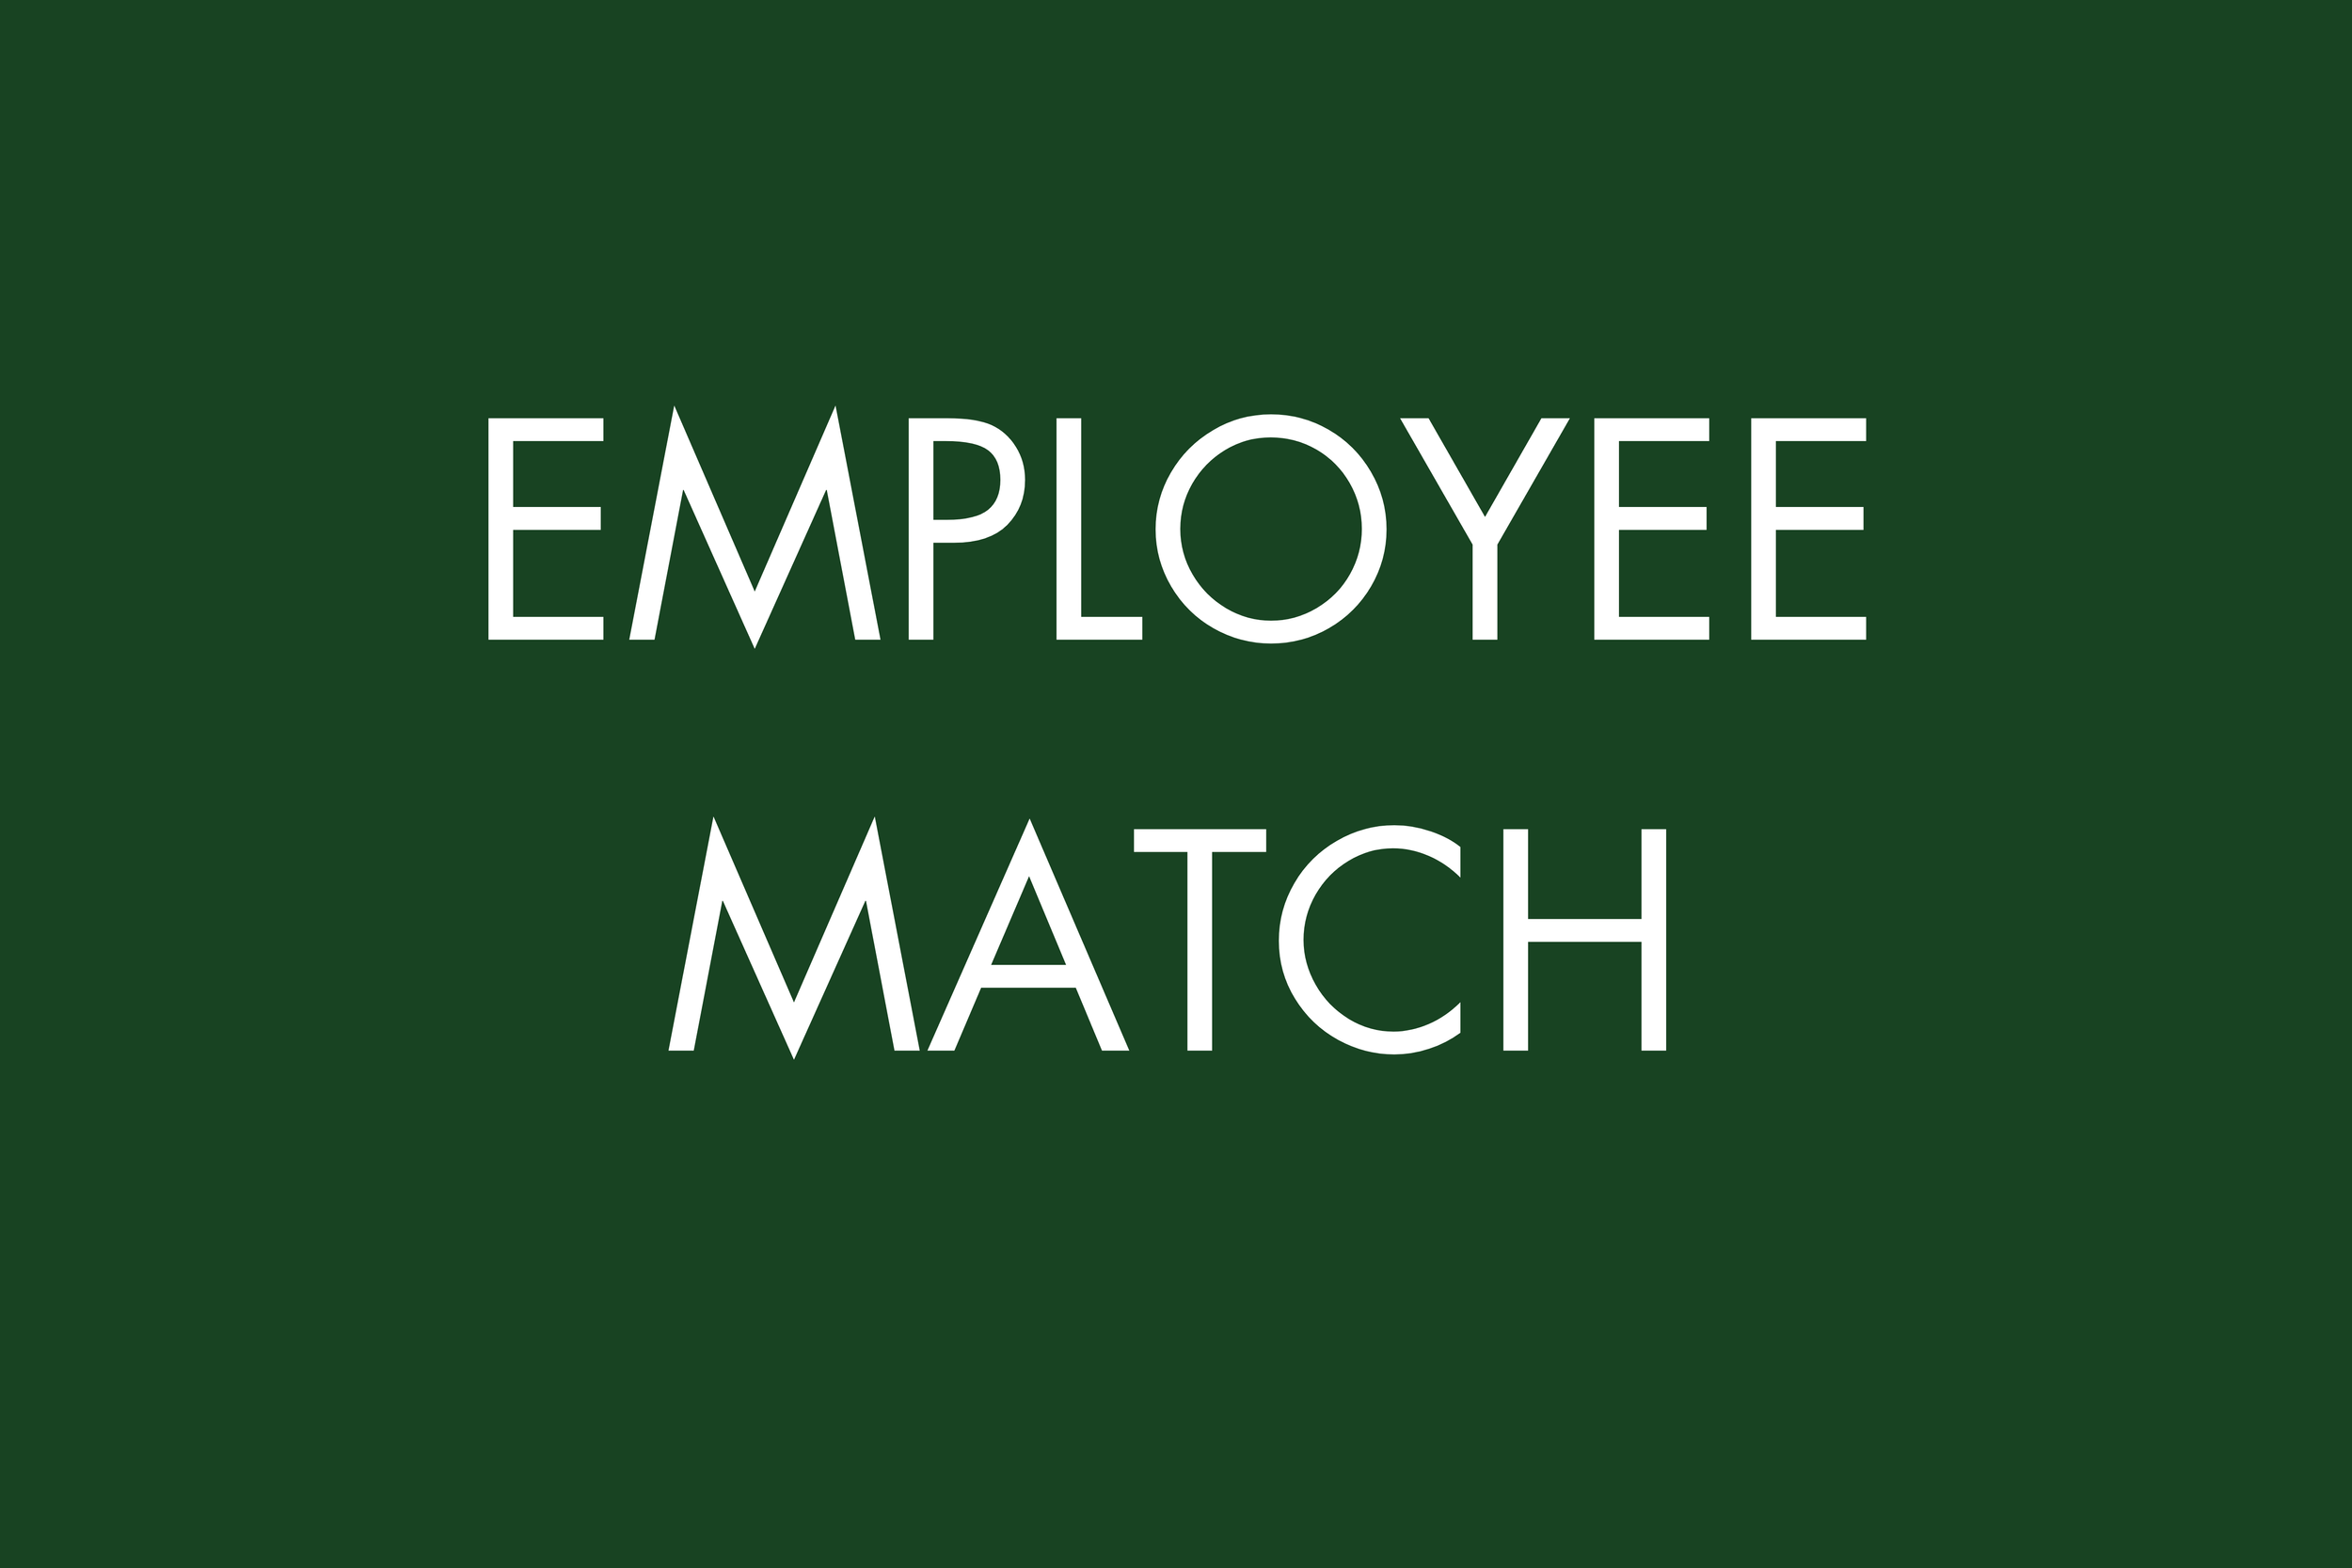 Employee Match